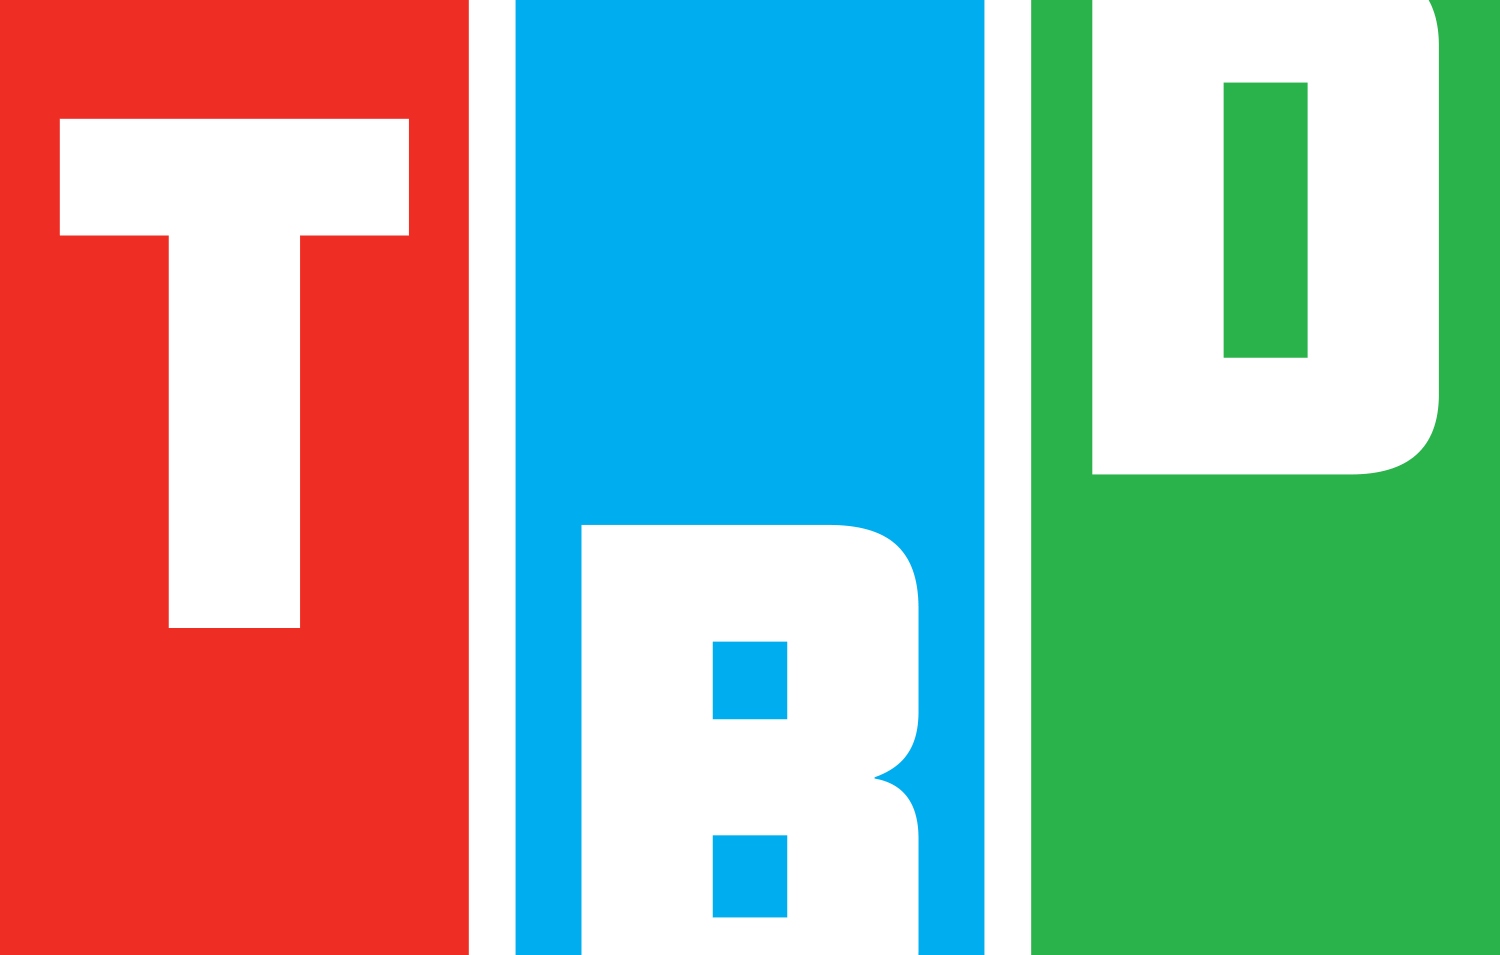 TBD Logo - TBD (TV network) | Logopedia | FANDOM powered by Wikia